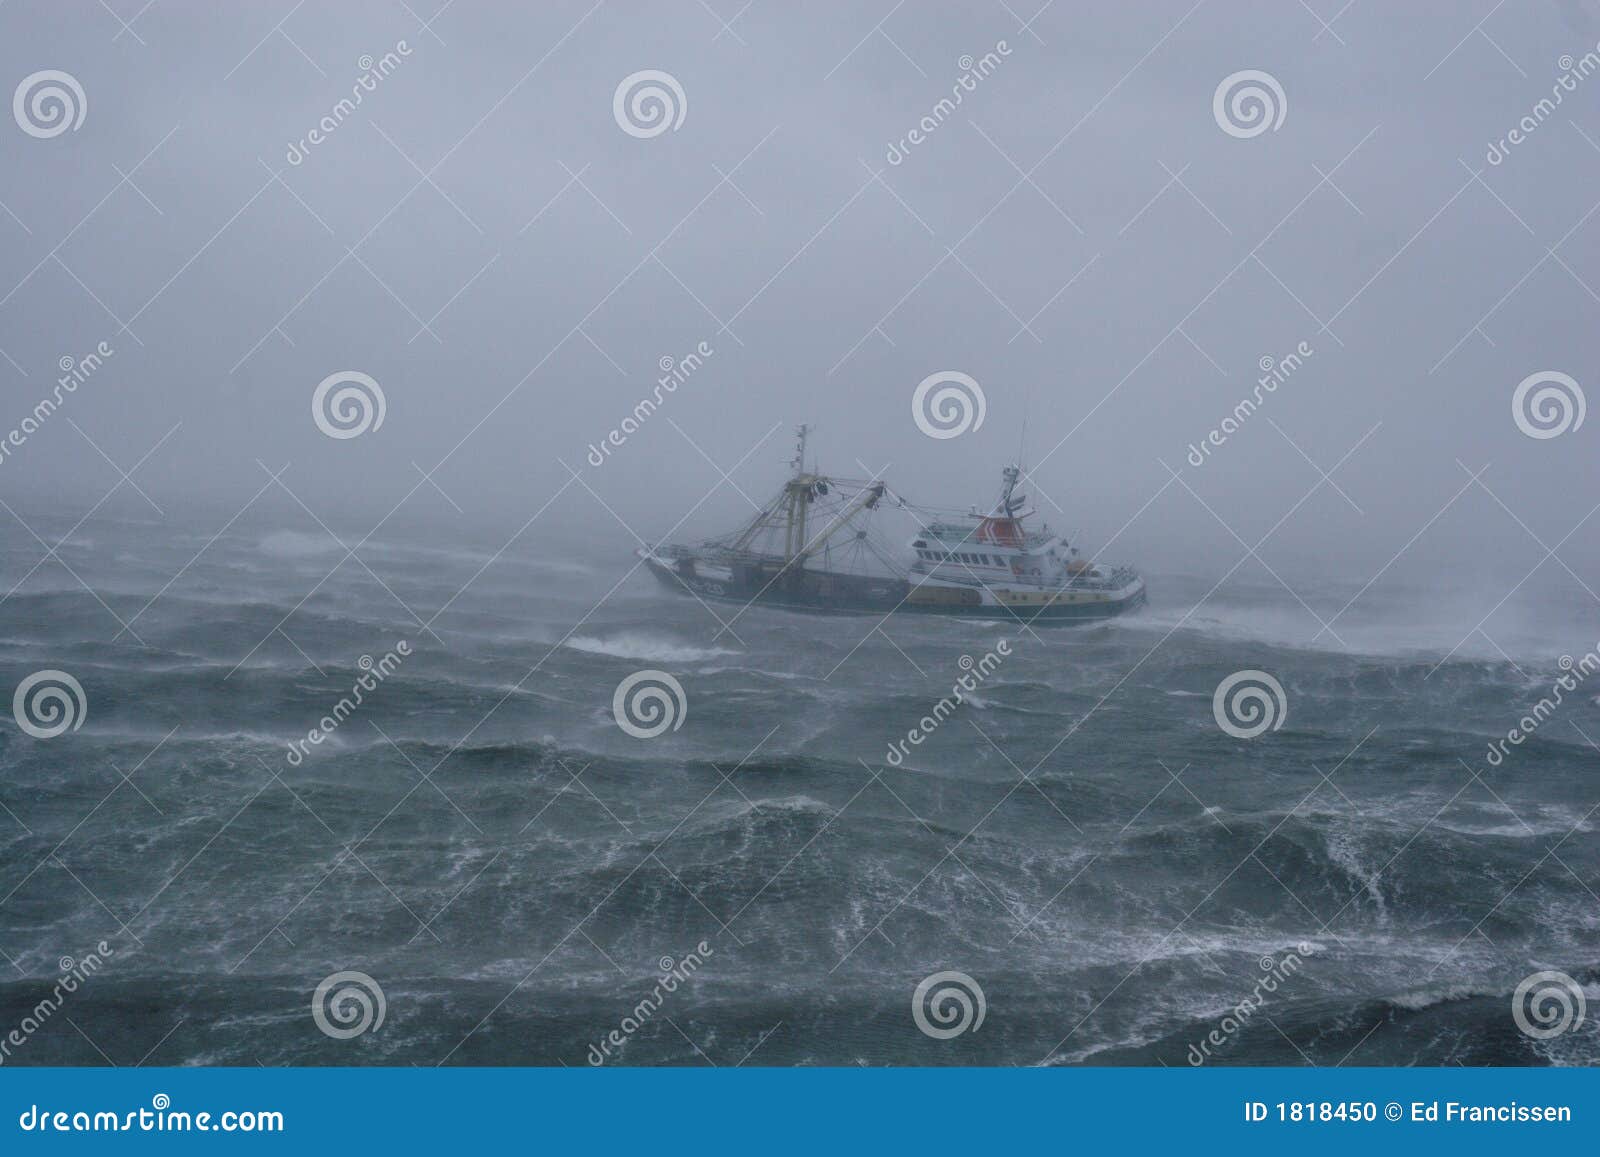 storm,rain and a fishing boat.